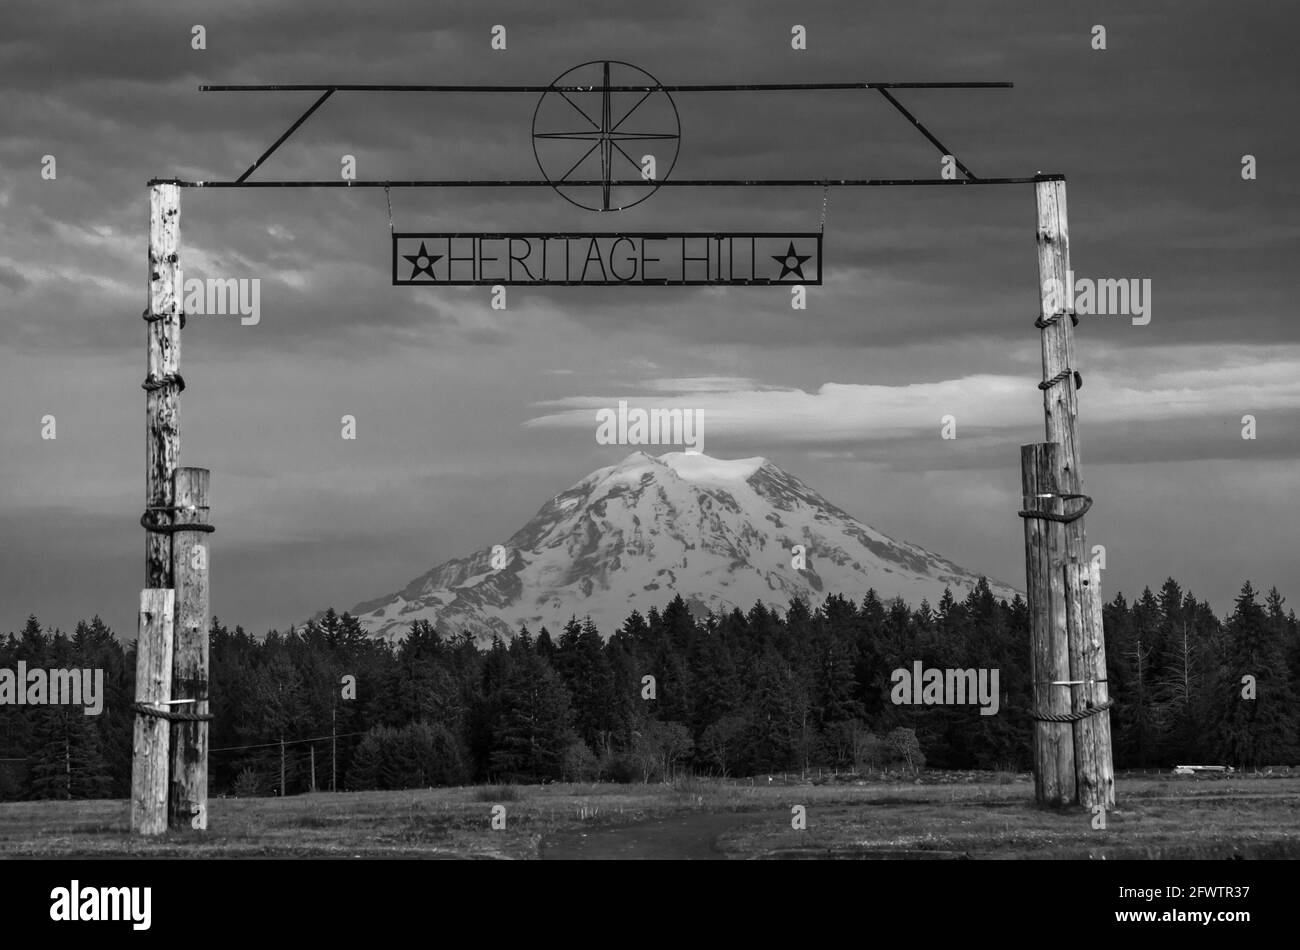 Mt Rainer, Washington state, visto da Heritage Hill all'Air Museum McChord AFB. Foto Stock